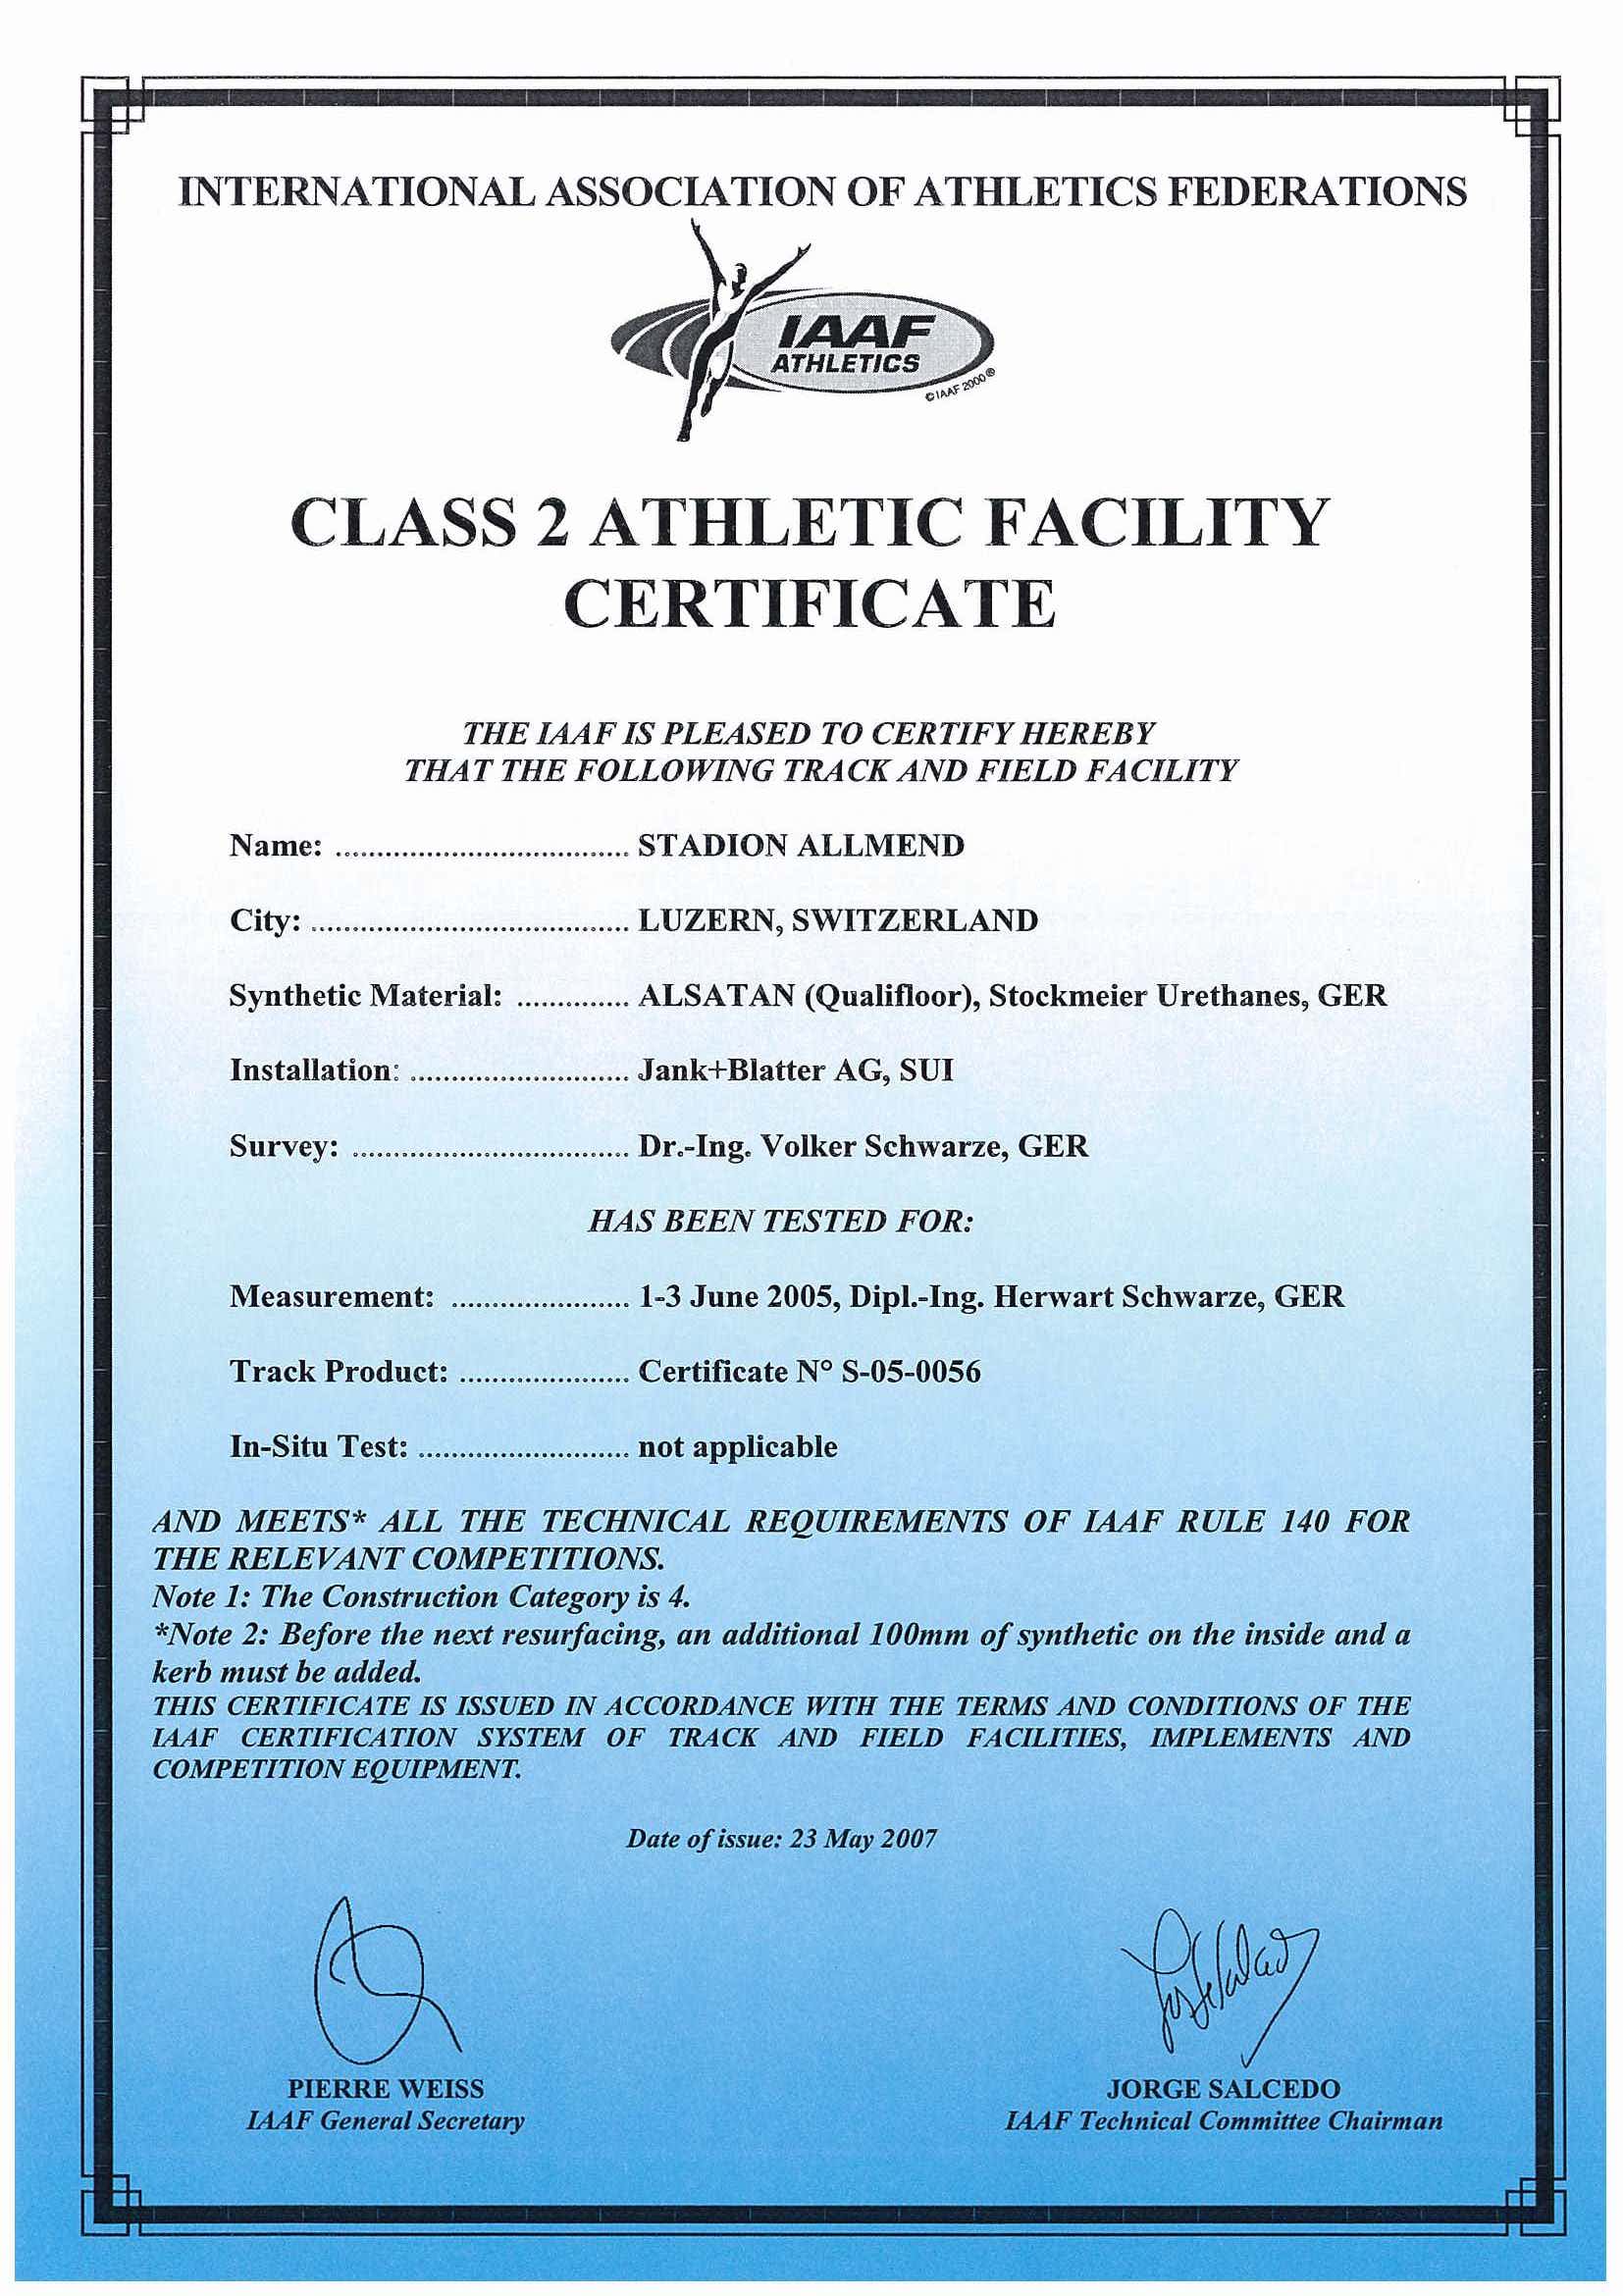 Alsatan IAAF class 2 certificiate from Lucerne Switzerland